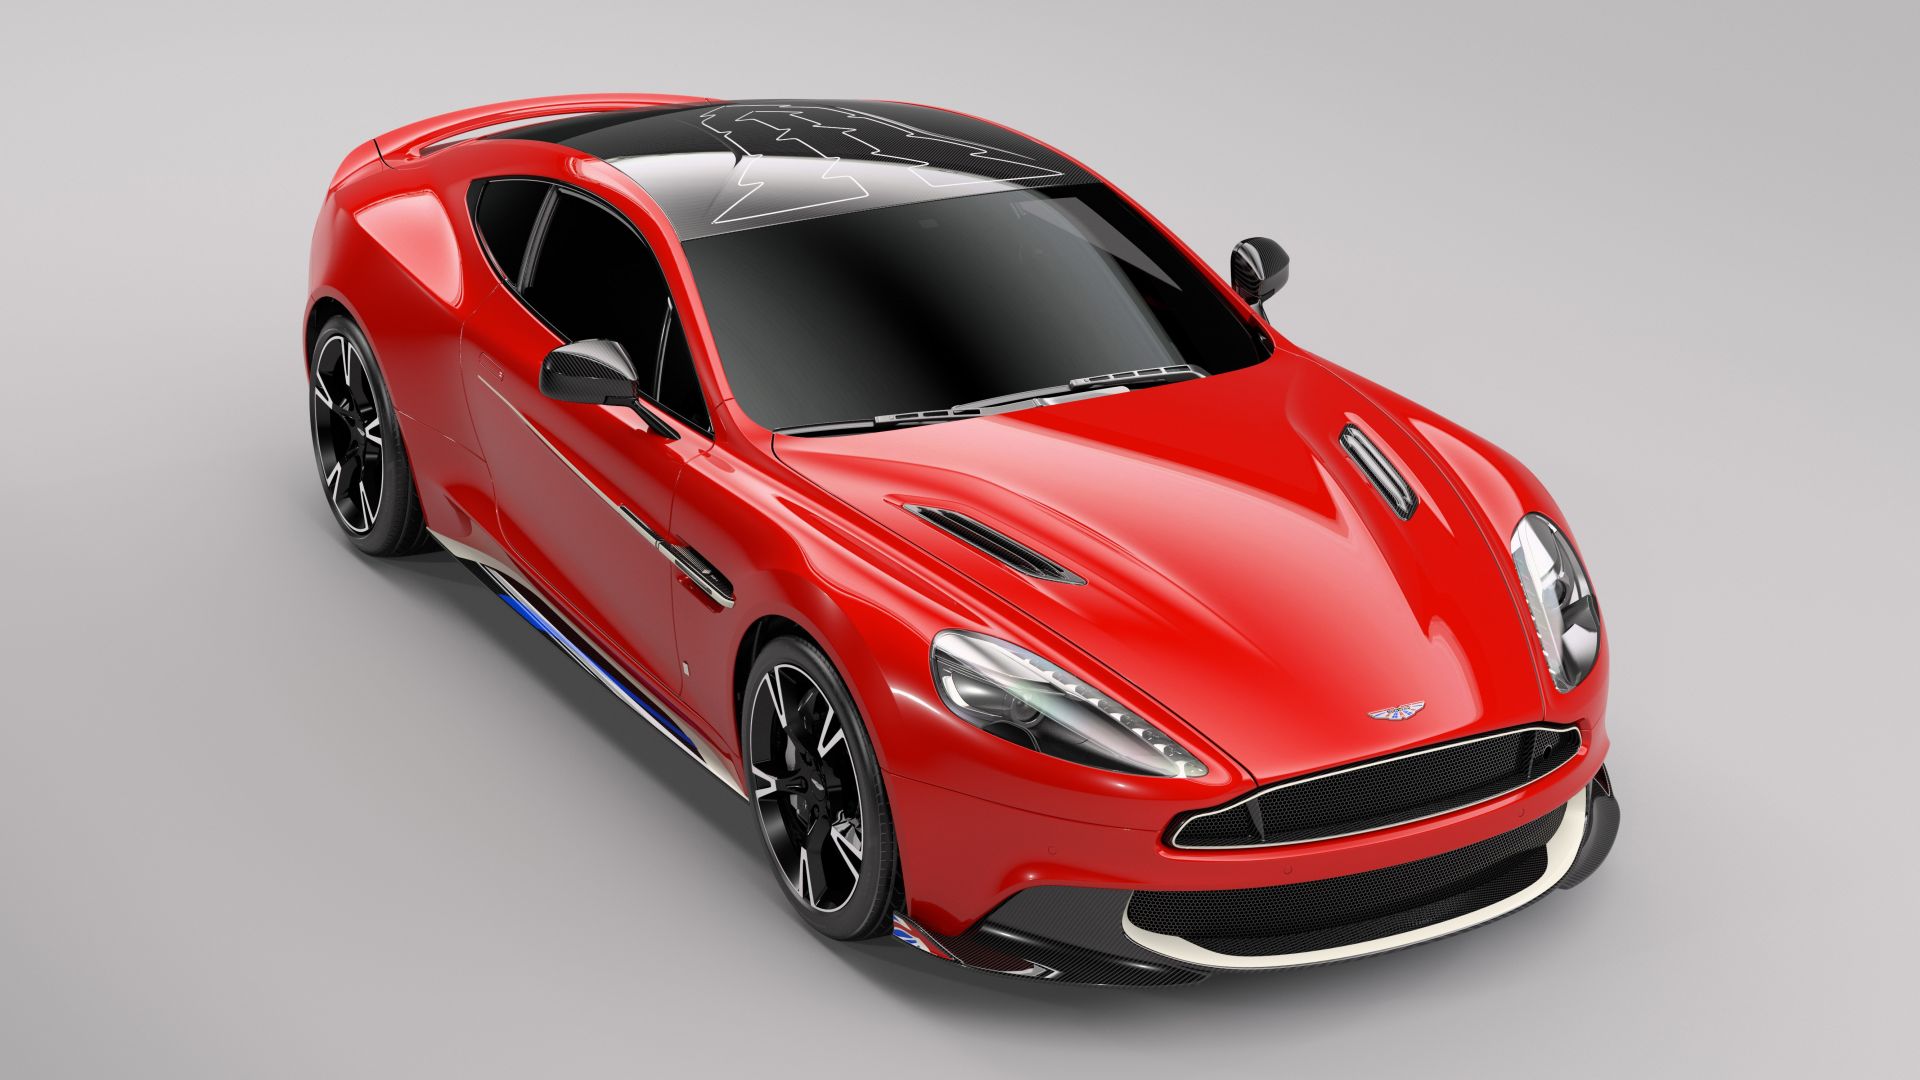 Wallpaper Aston Martin Vanquish, red sports car, front view